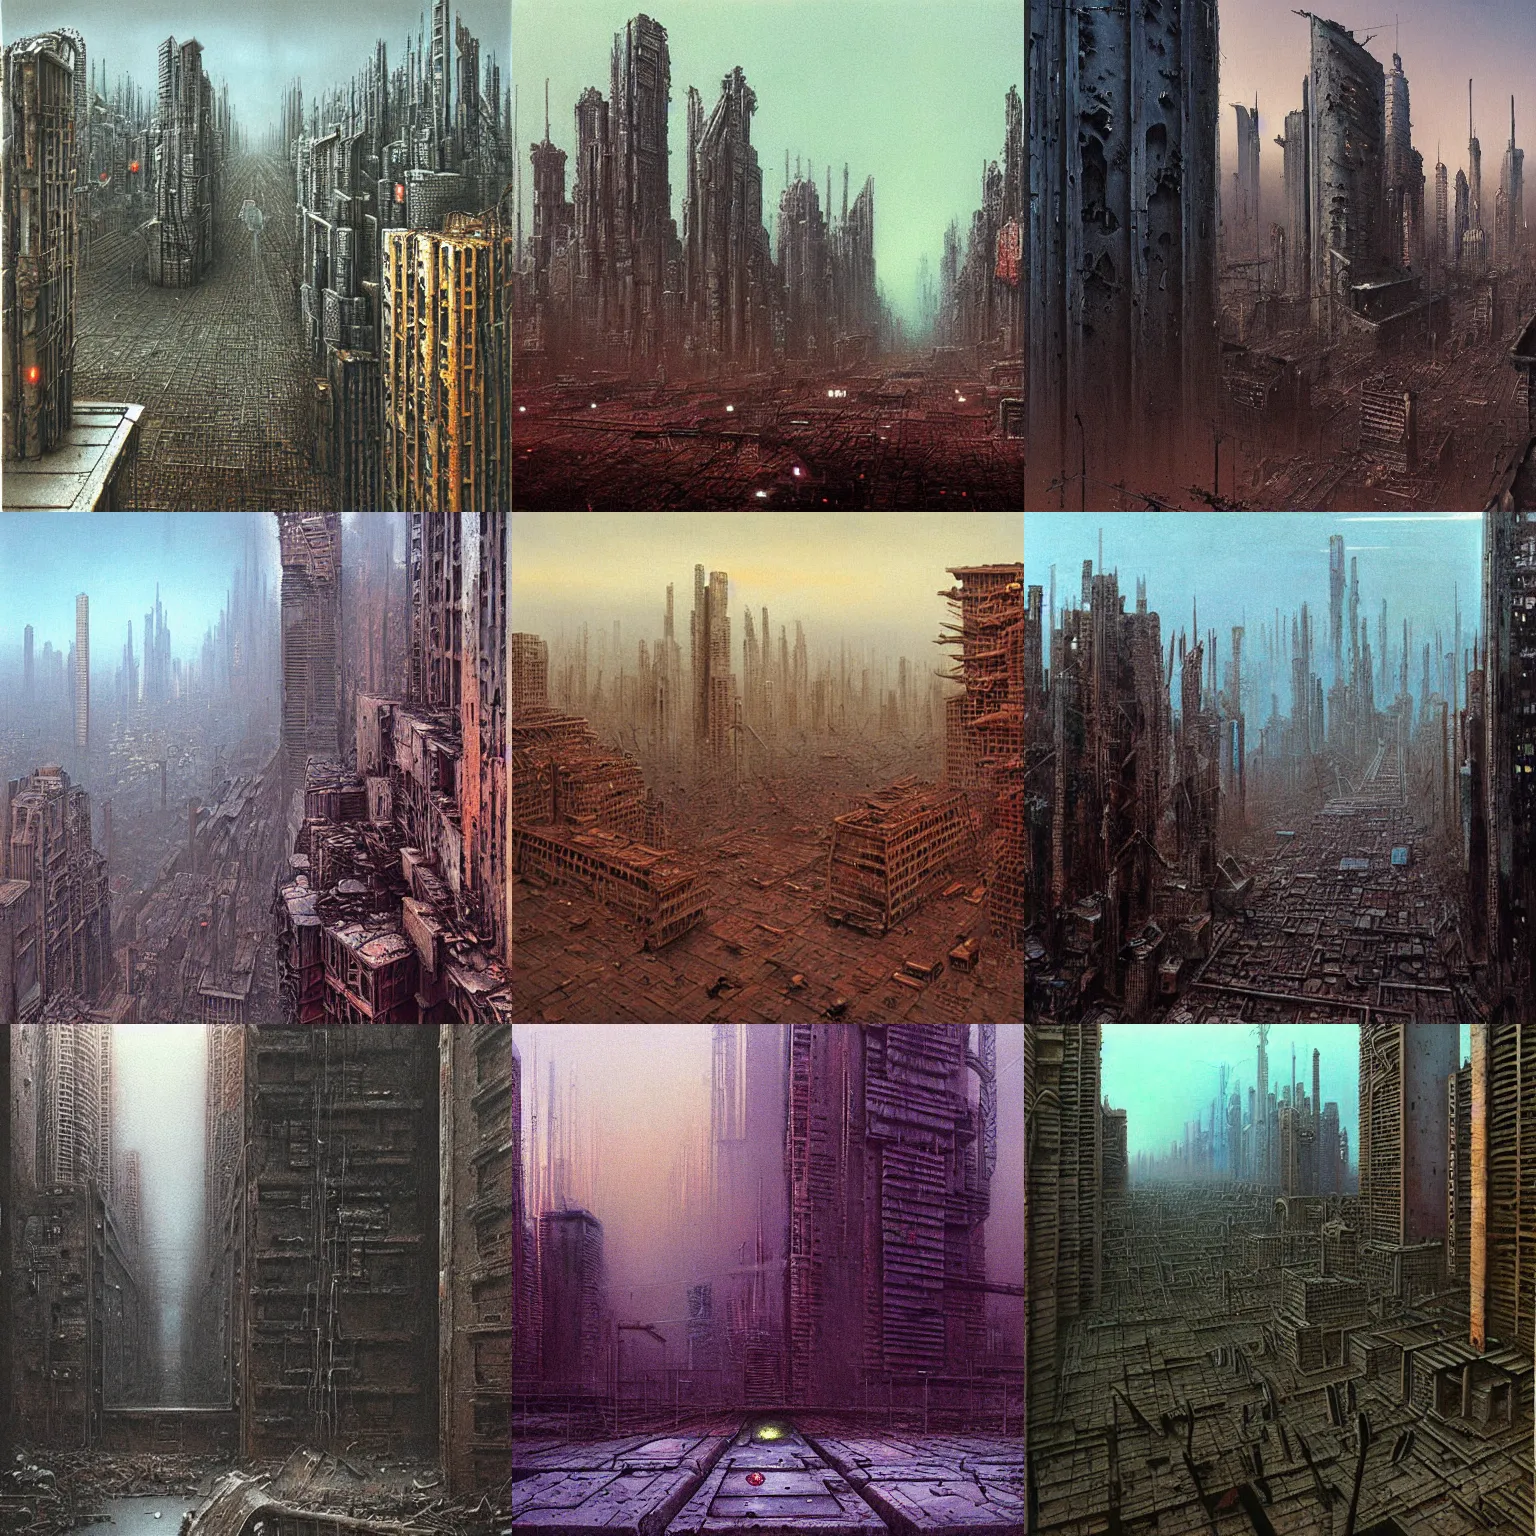 Prompt: ruined cyberpunk city painted by Zdzisław Beksiński